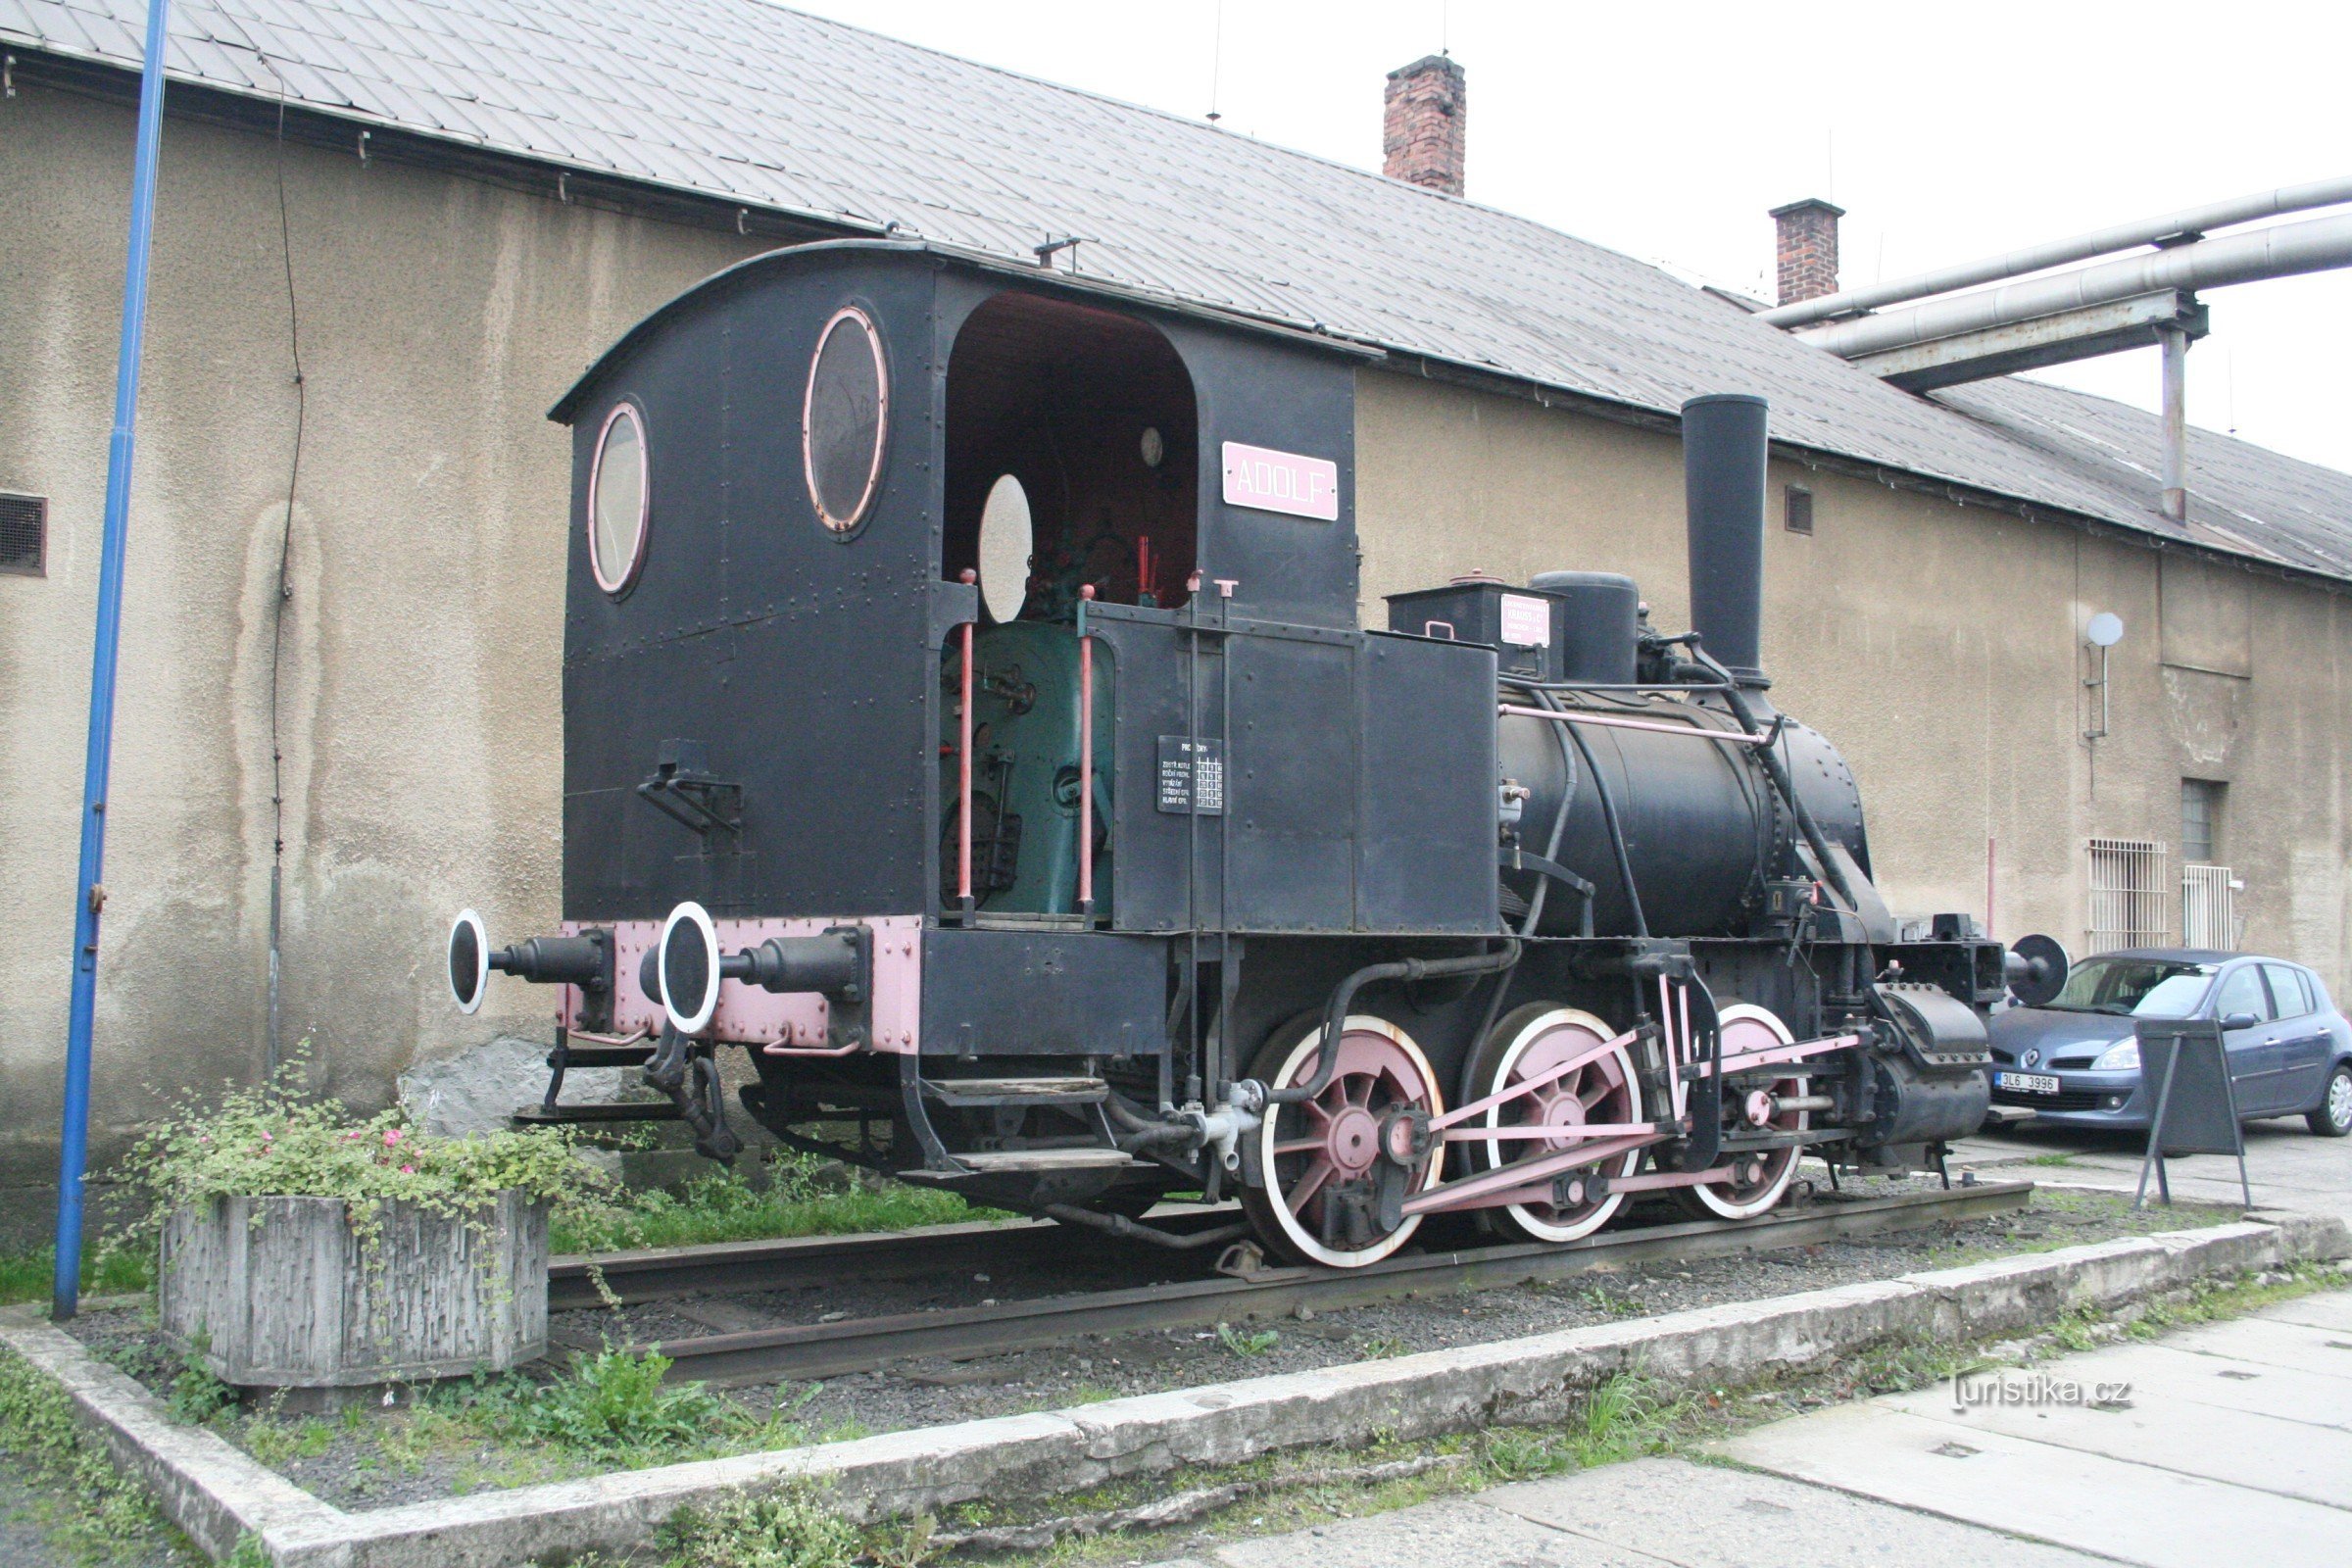 Jernbanemonument - damplokomotiv Adolf